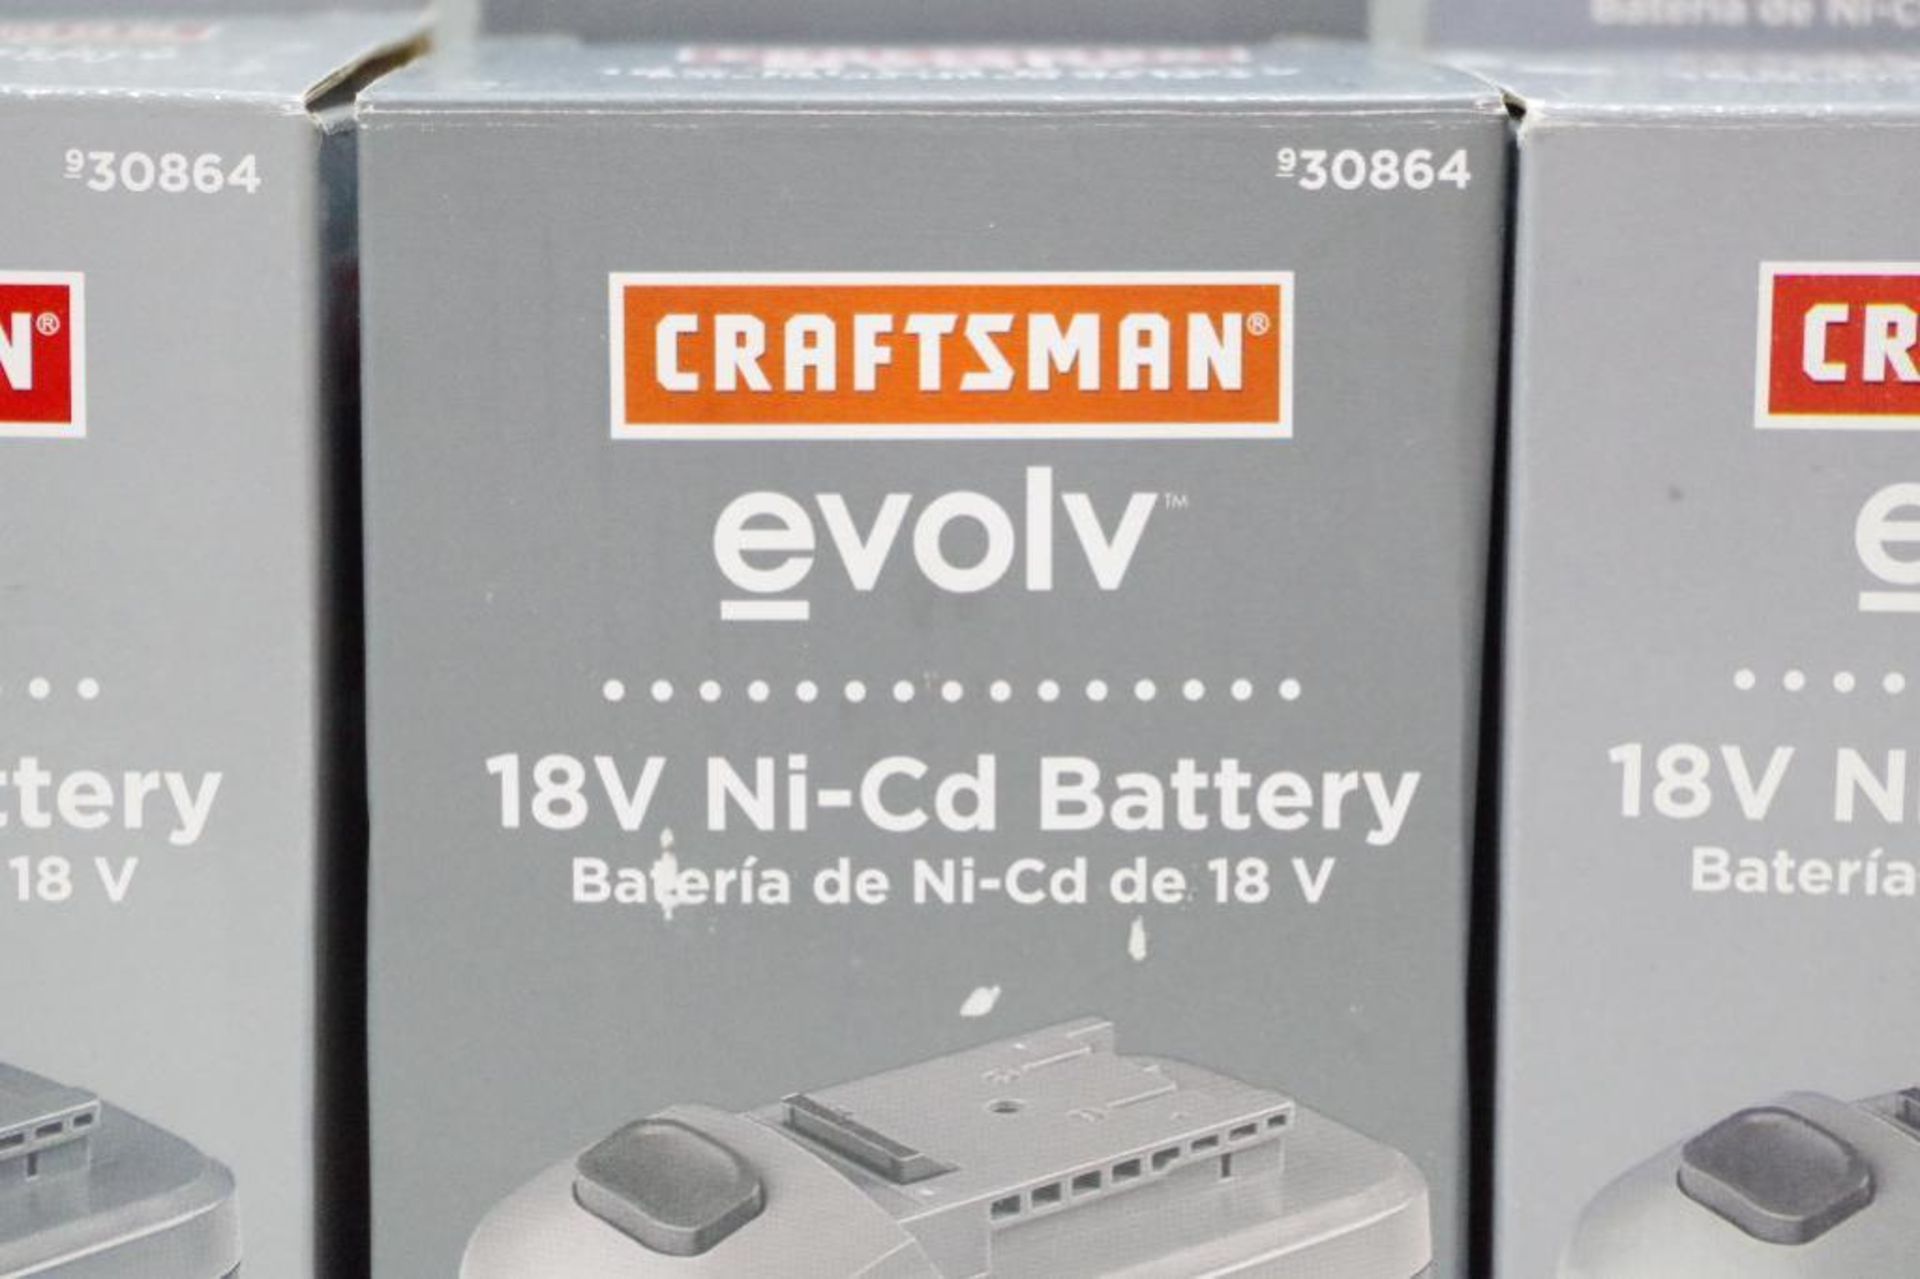 (8) NEW CRAFTSMAN evolv 18V Ni-Cd Batteries M/N 930864 - Image 2 of 3